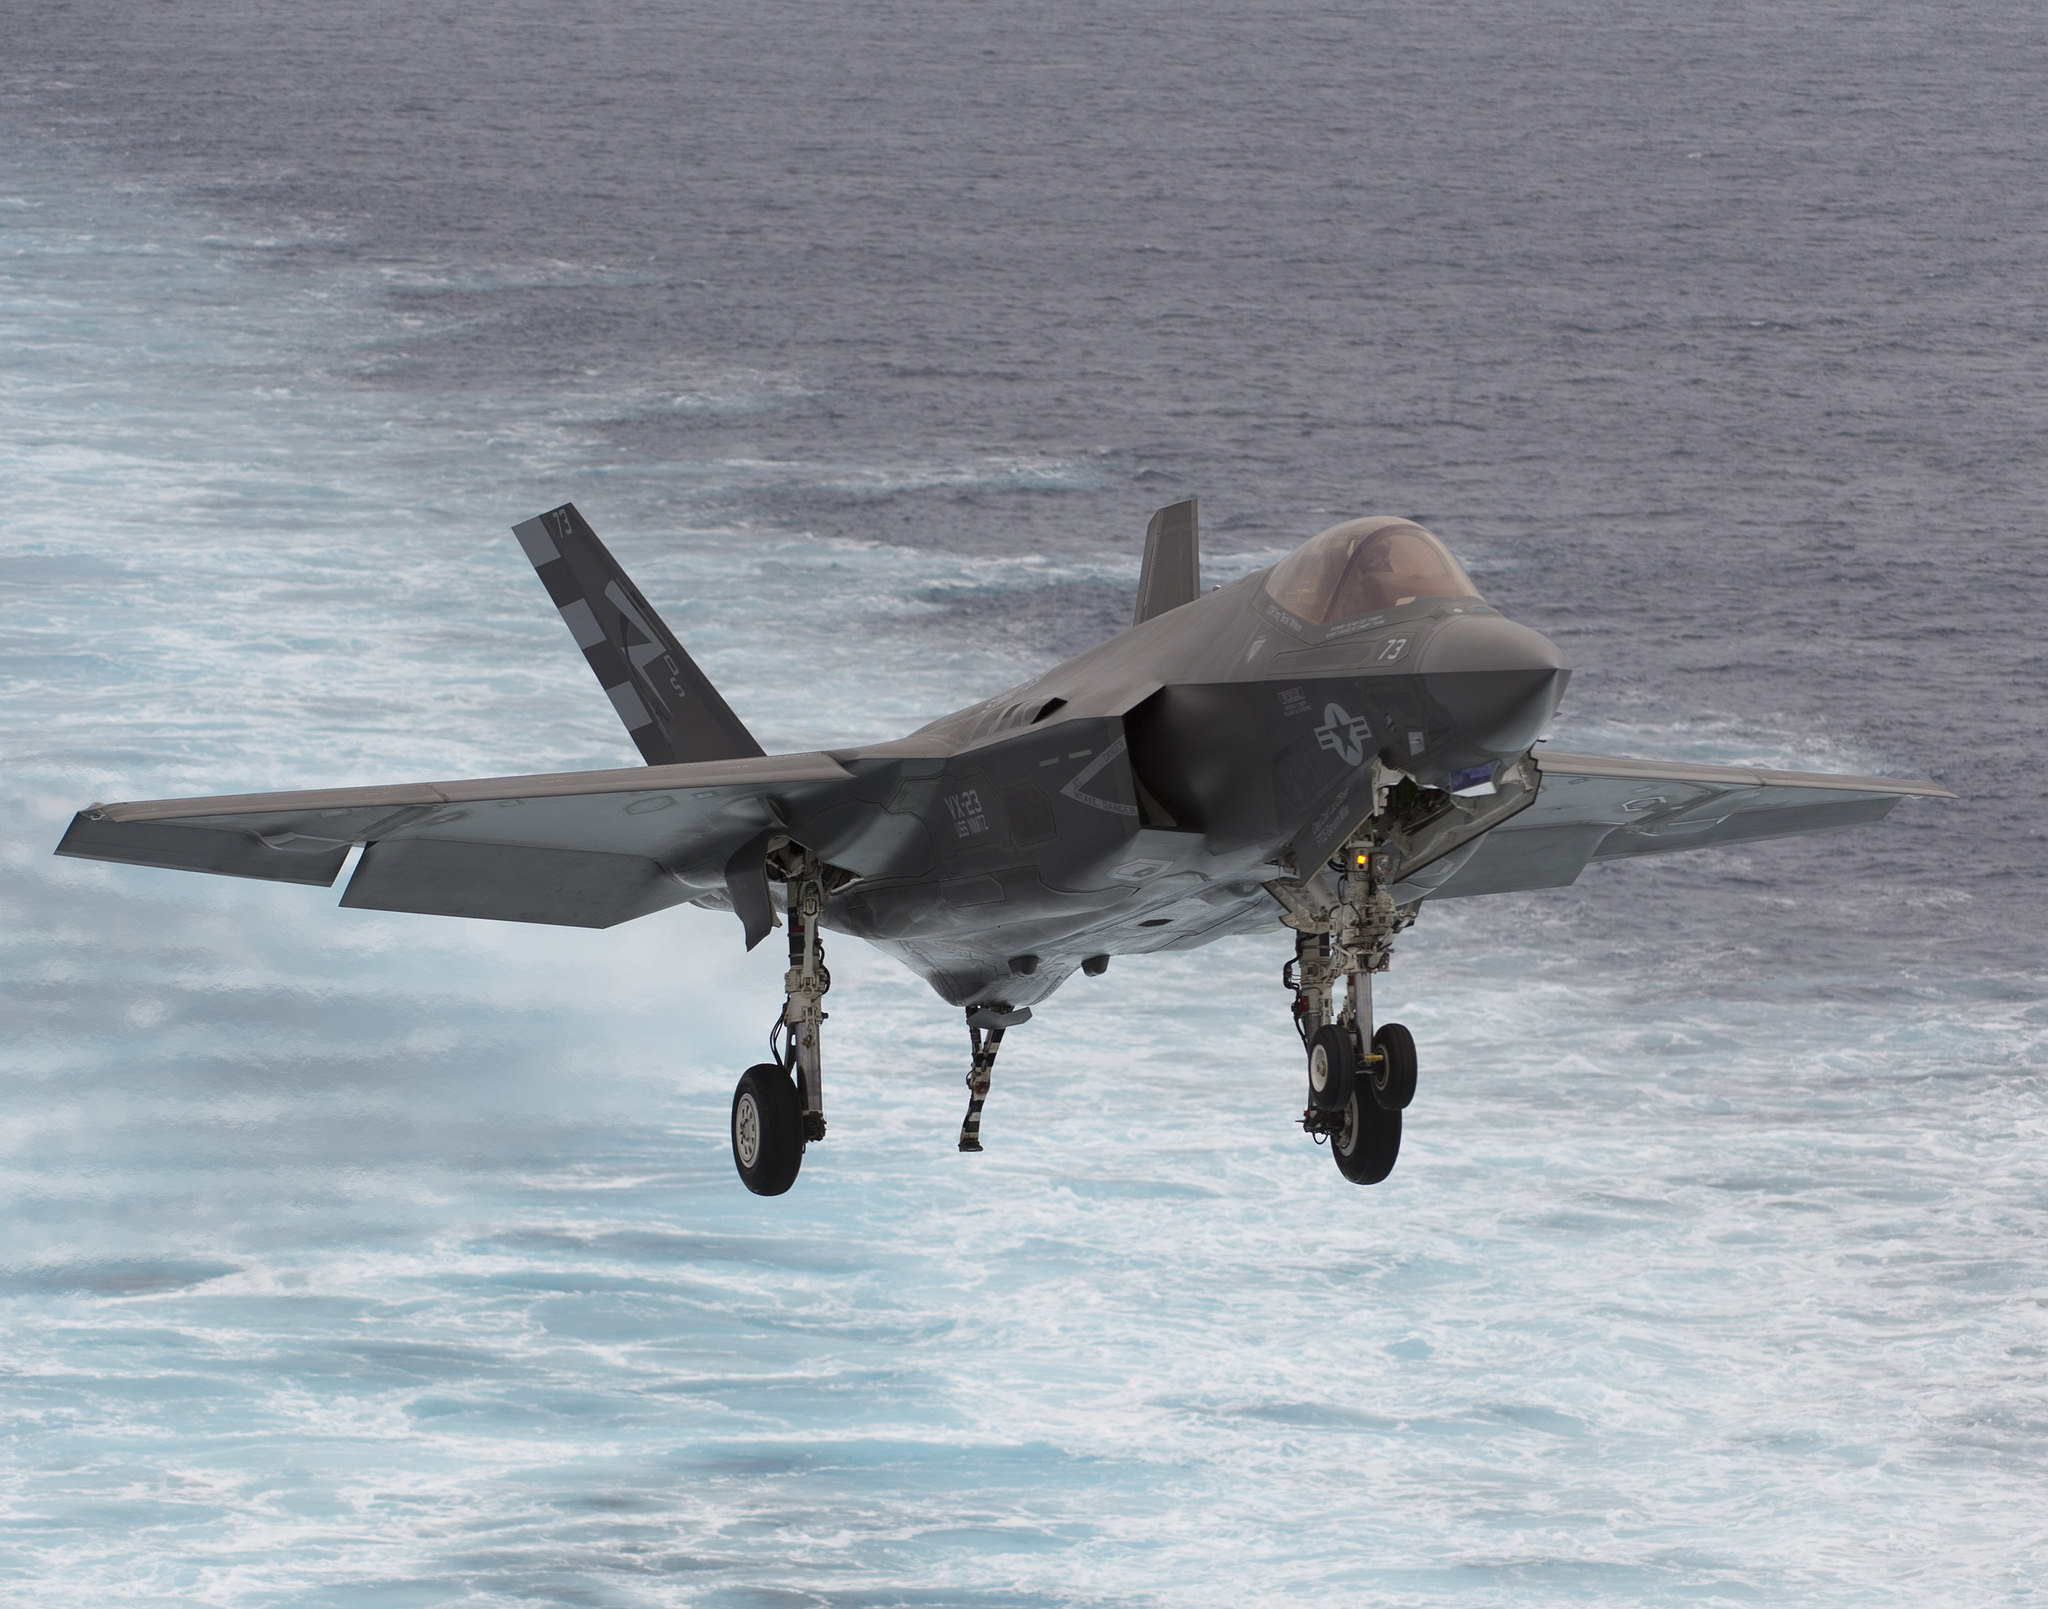 America's new trillion-dollar fighter jet under fire again | Fortune